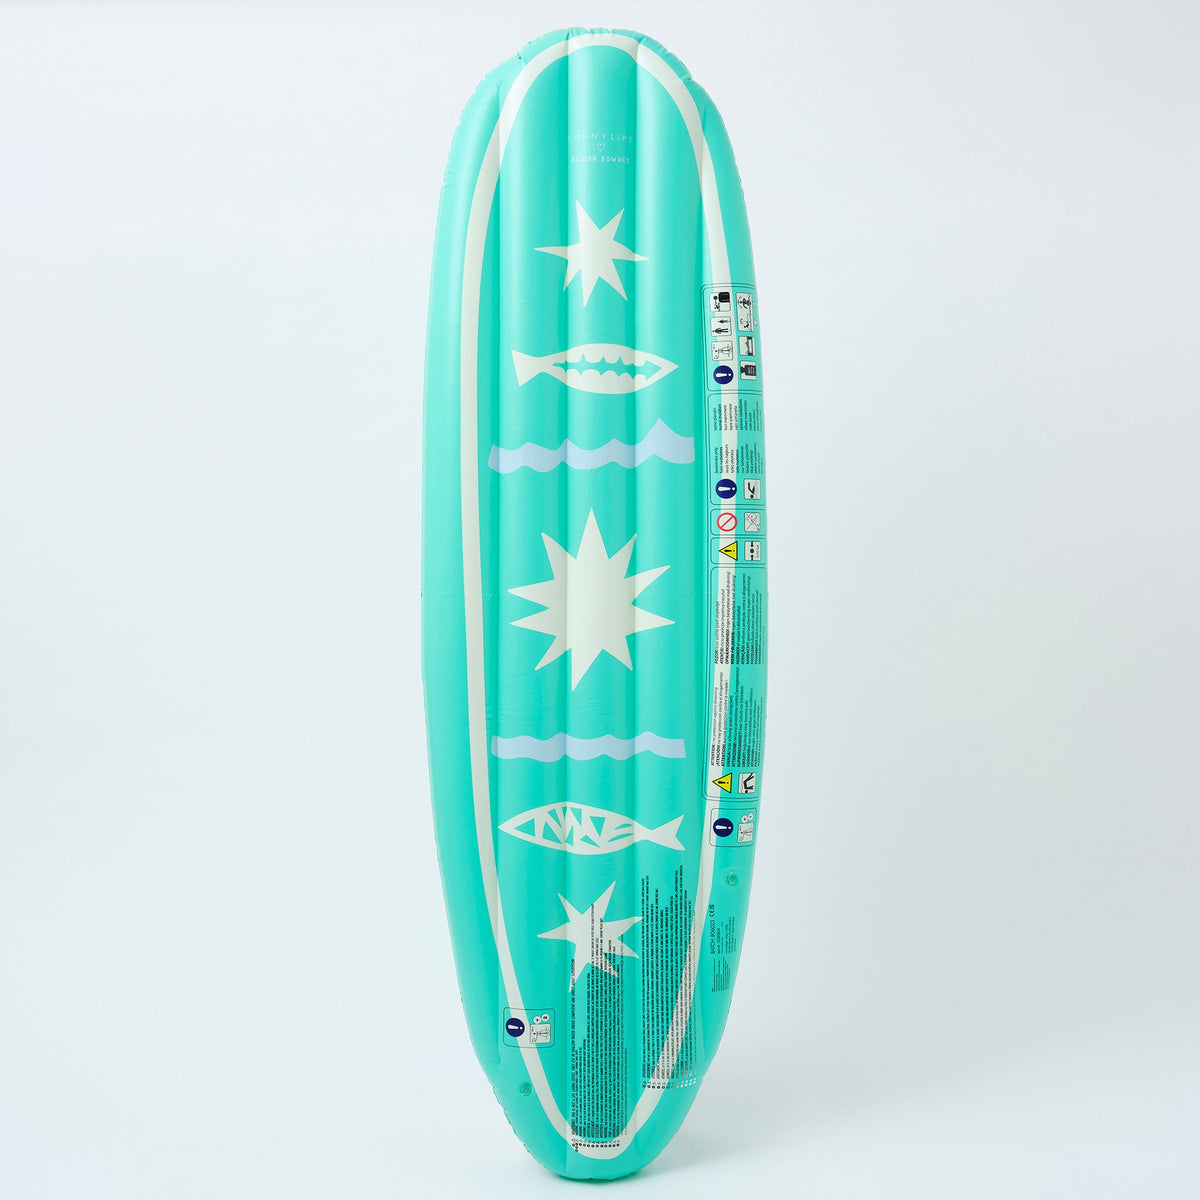 SunnyLife Surfboard - De Playa Esmeralda